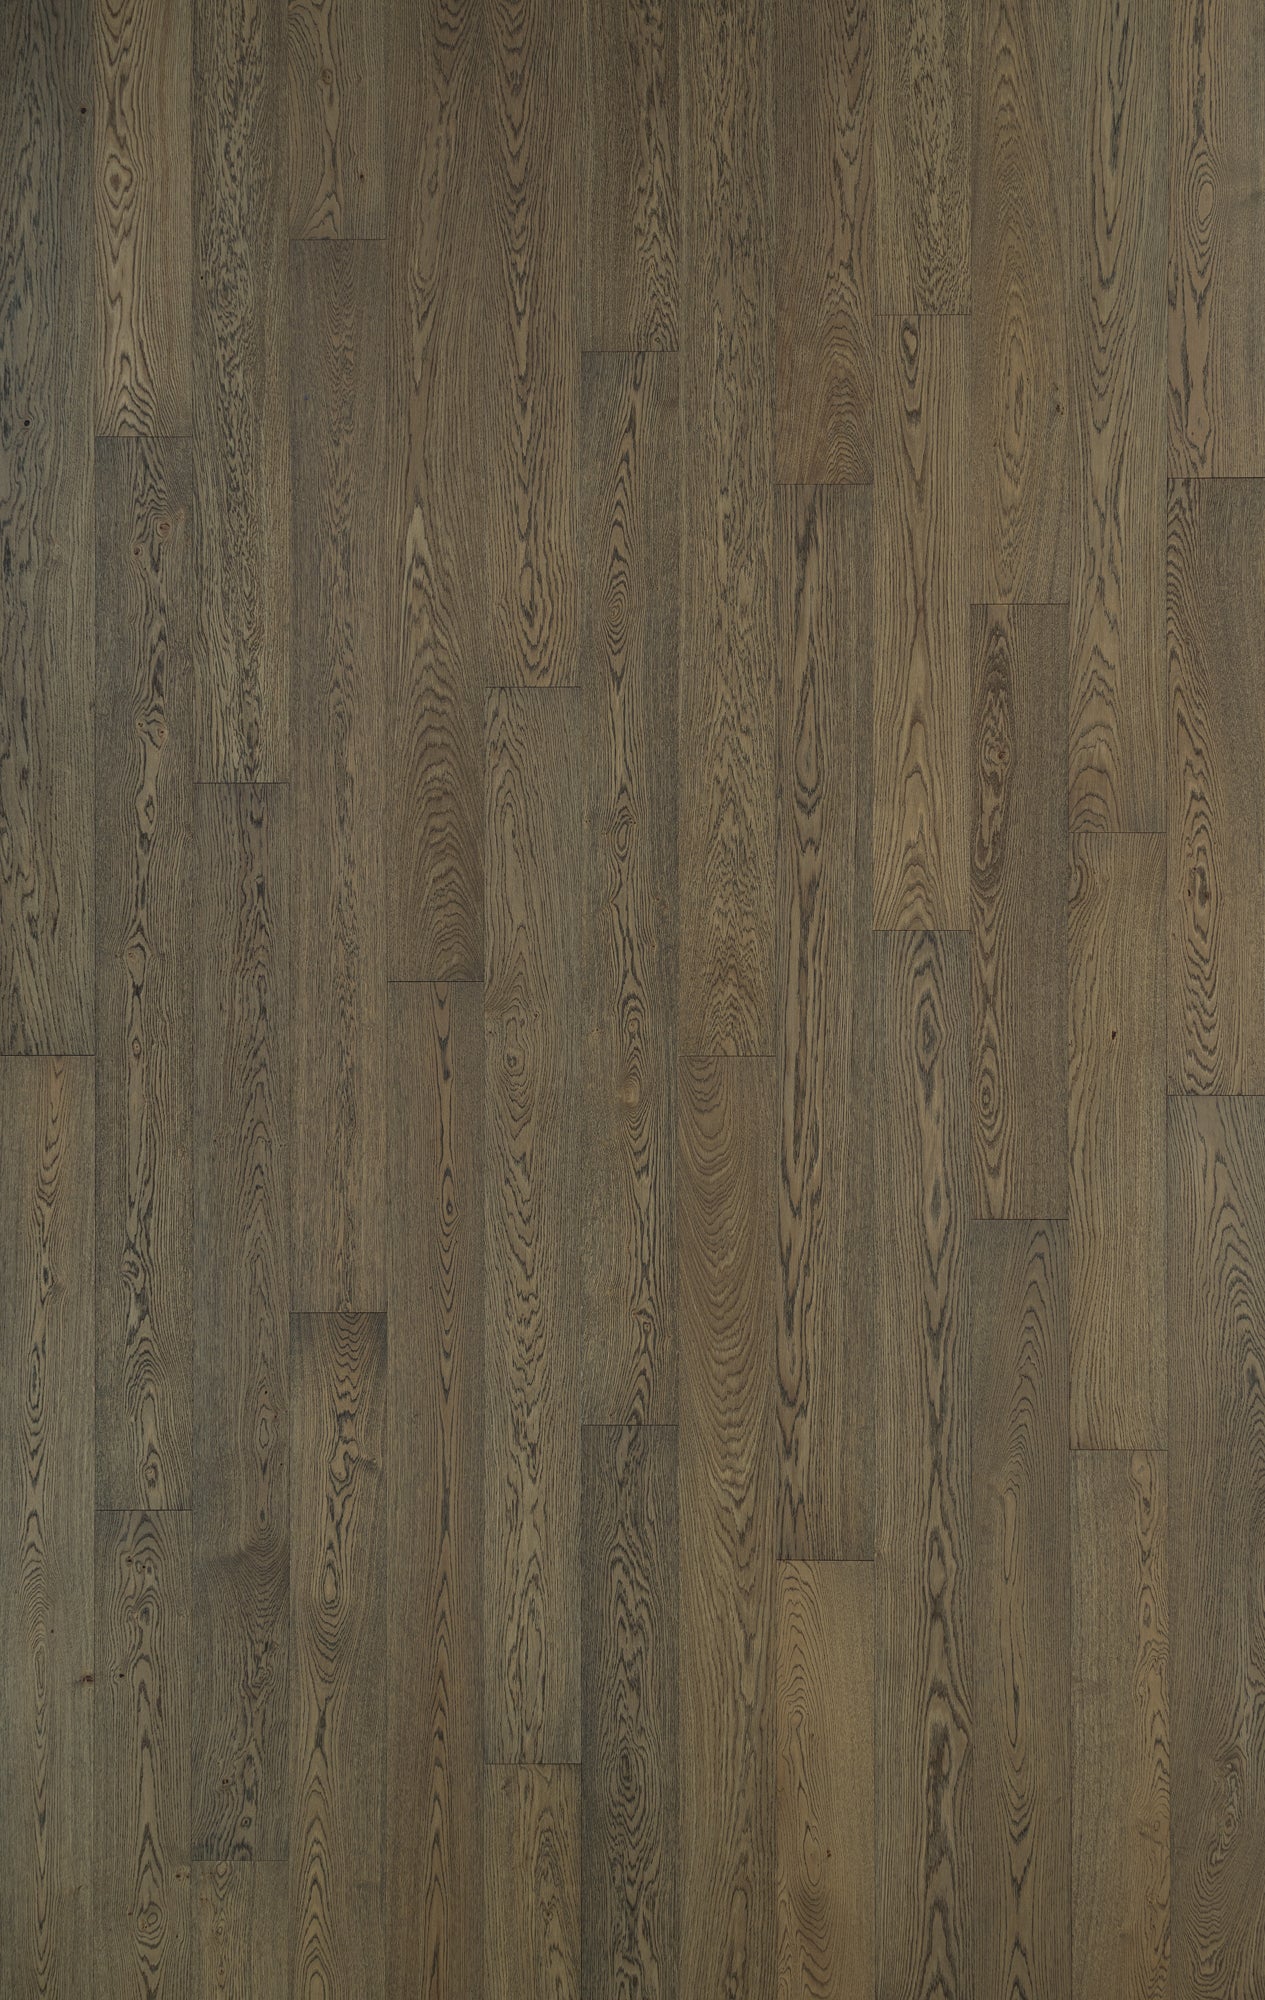 MA06 ROVERE OAK | Hardwood Flooring - $15.53 - $24.12